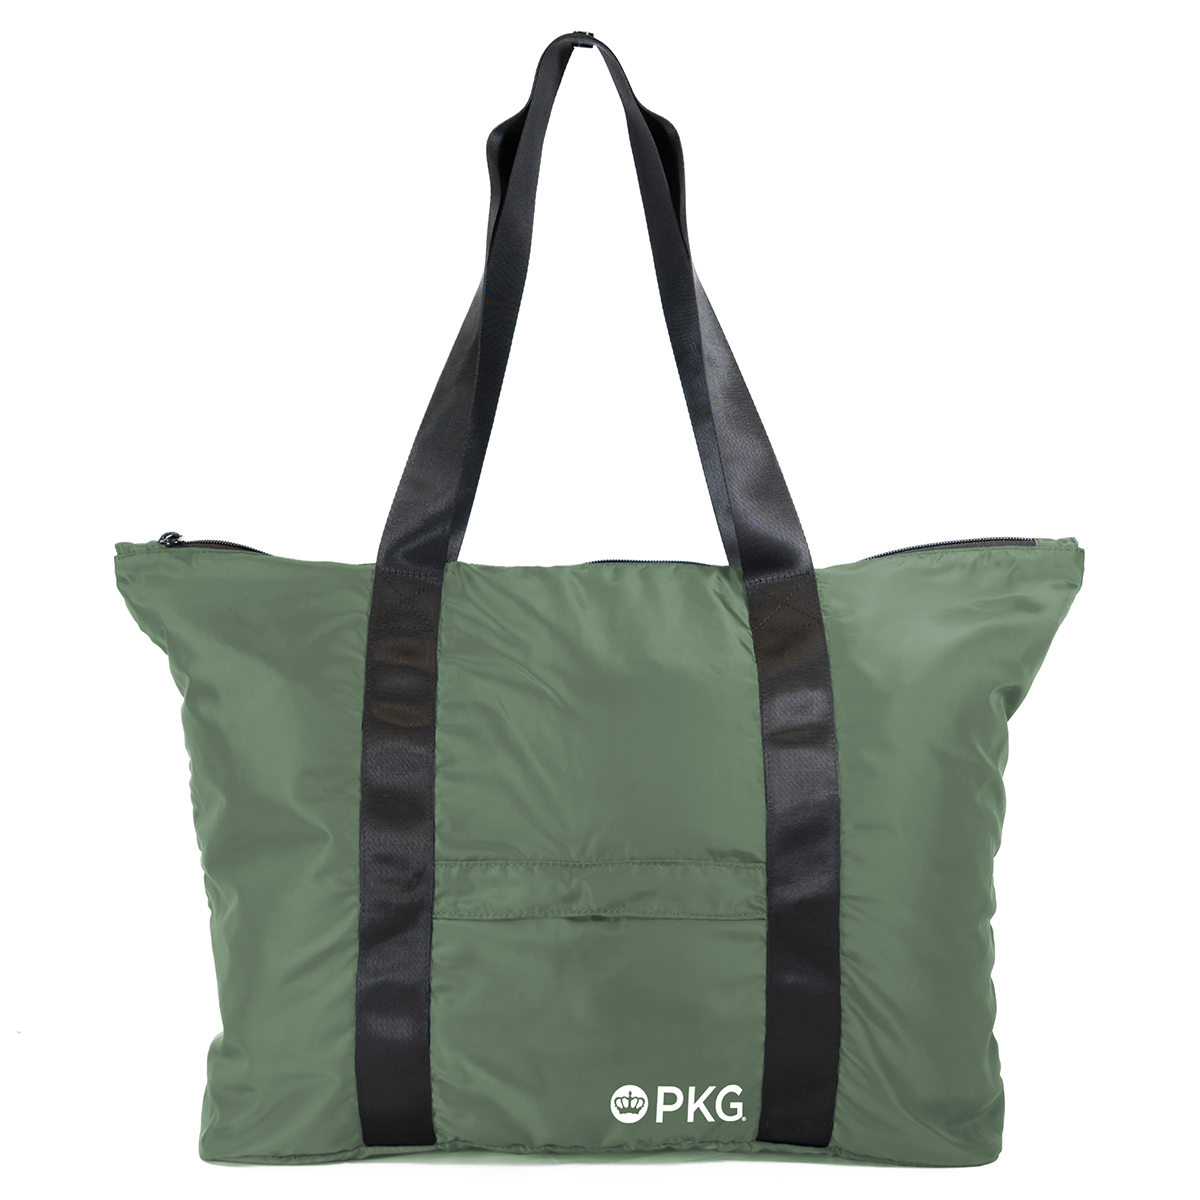 PKG Umiak Recycled Packable Tote Bag